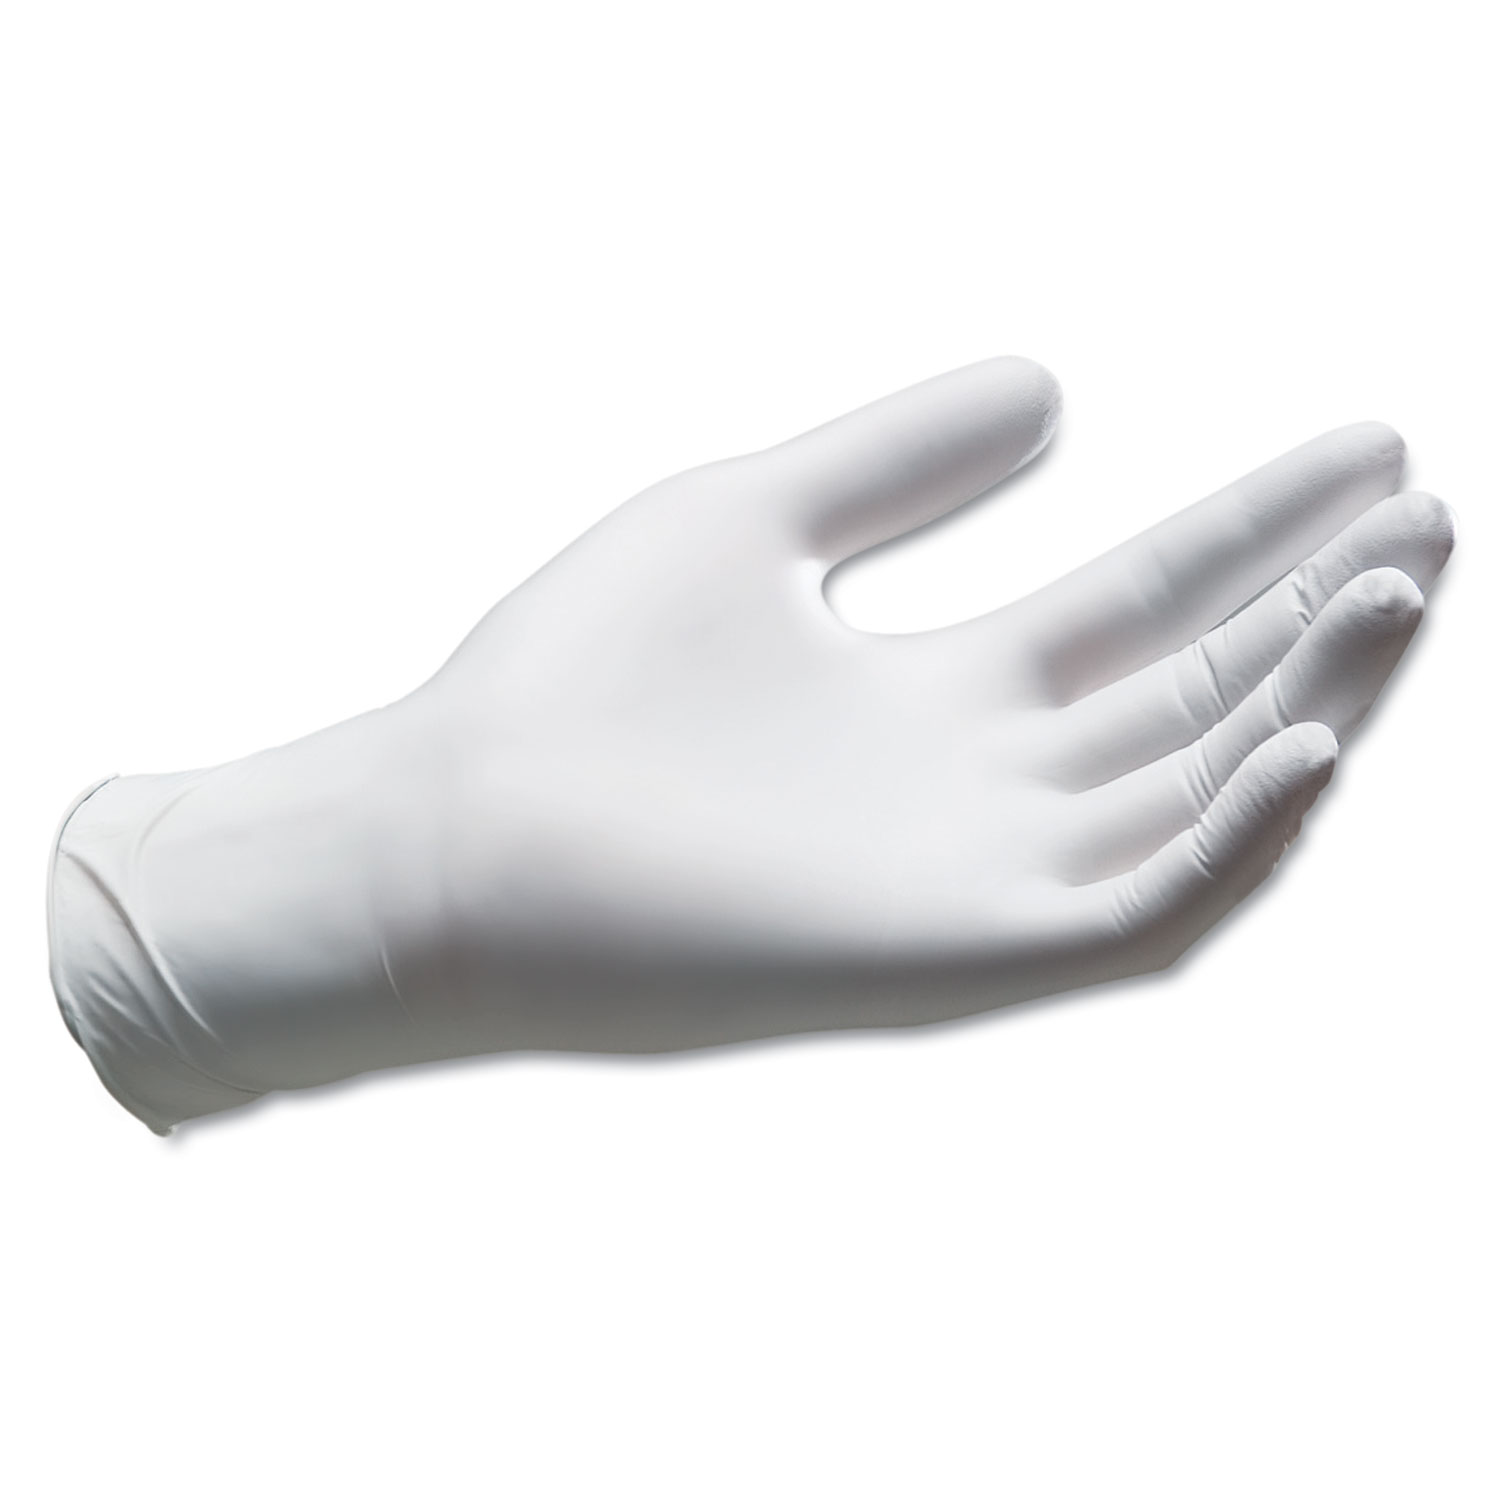  Kimberly-Clark Professional* 50708 STERLING Nitrile Exam Gloves, Powder-free, Gray, 242 mm Length, Large, 200/Box (KCC50708) 